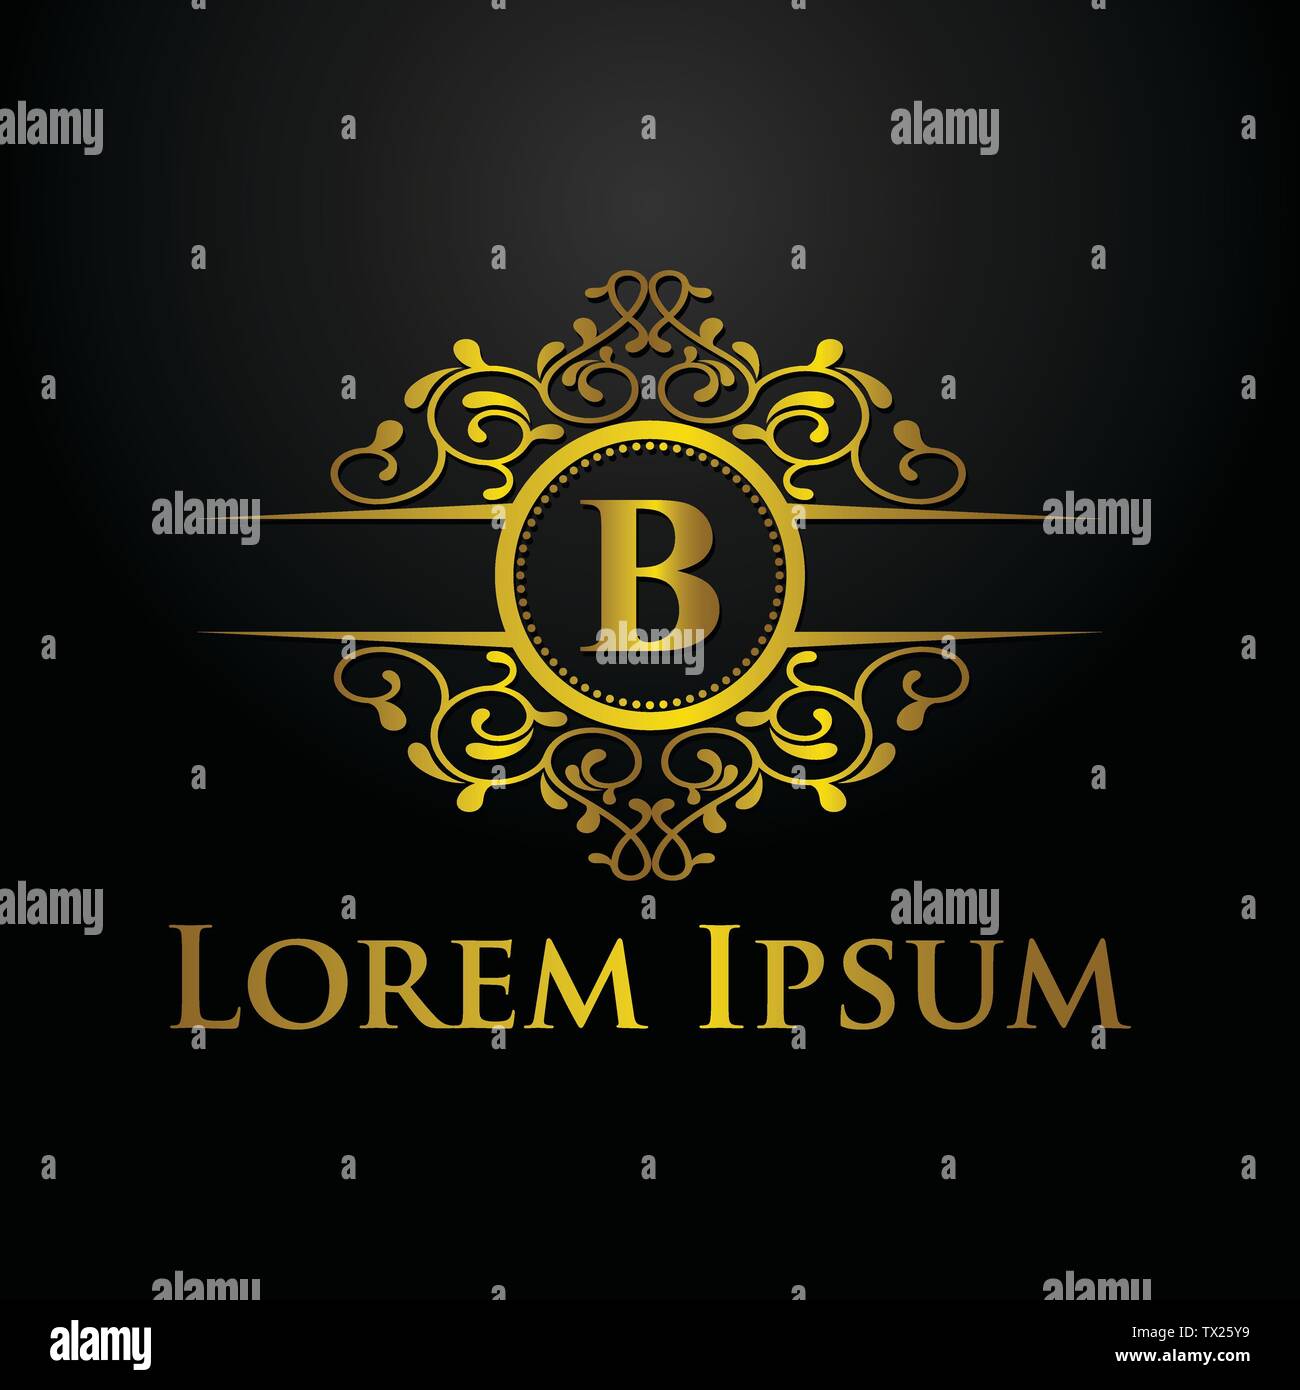 luxury logo, letter B logo, classic and elegant logo designs for ...